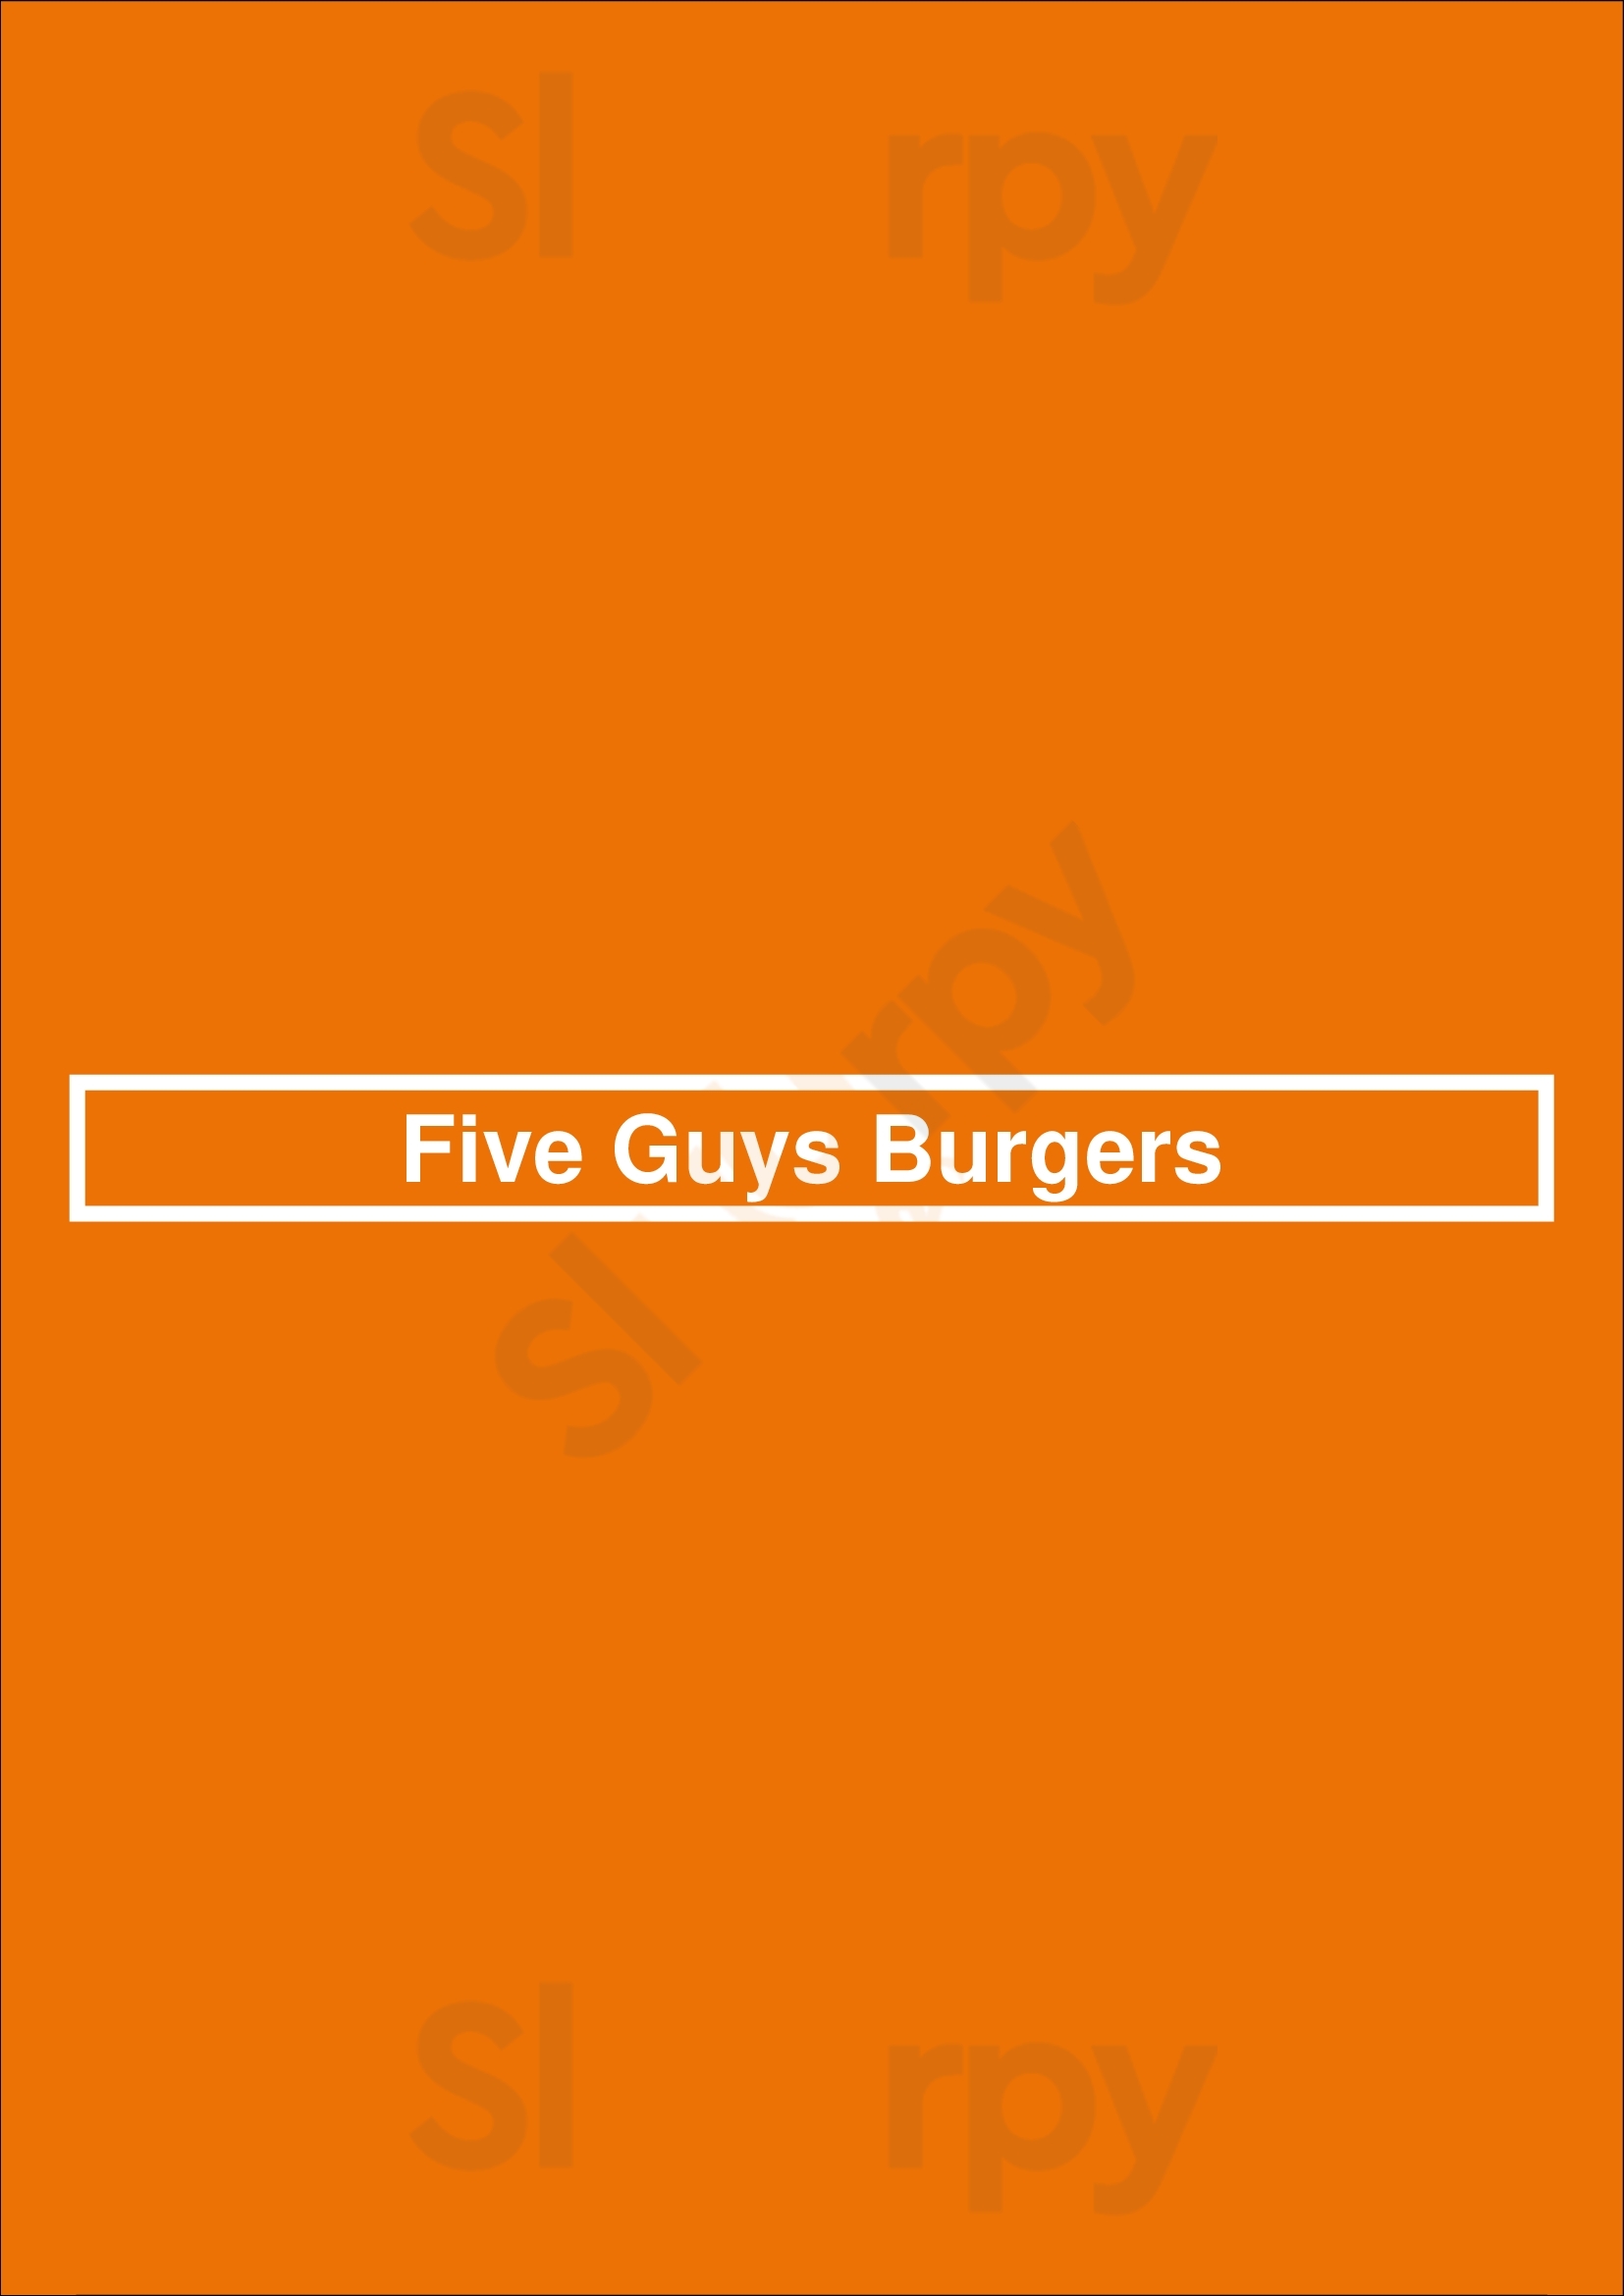 Five Guys Brooklyn Menu - 1